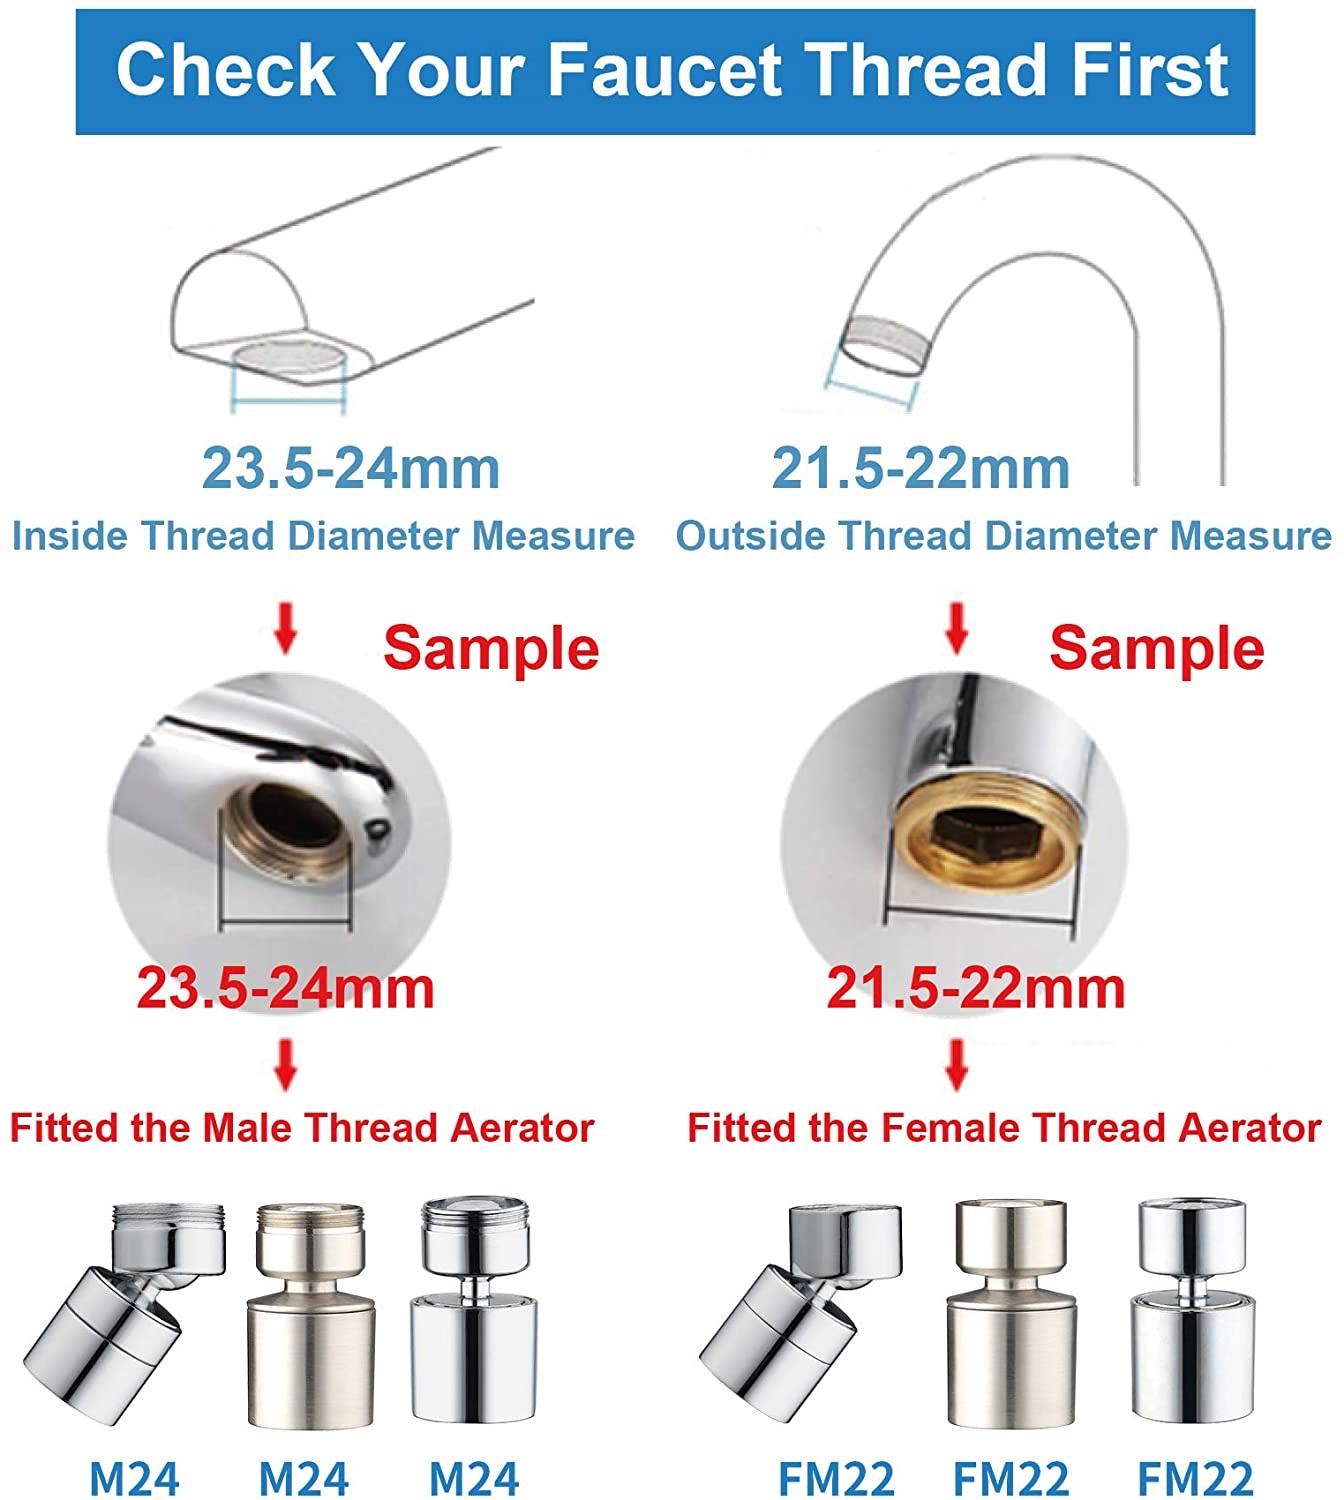 Professional 360 degree dual spray faucet aerator